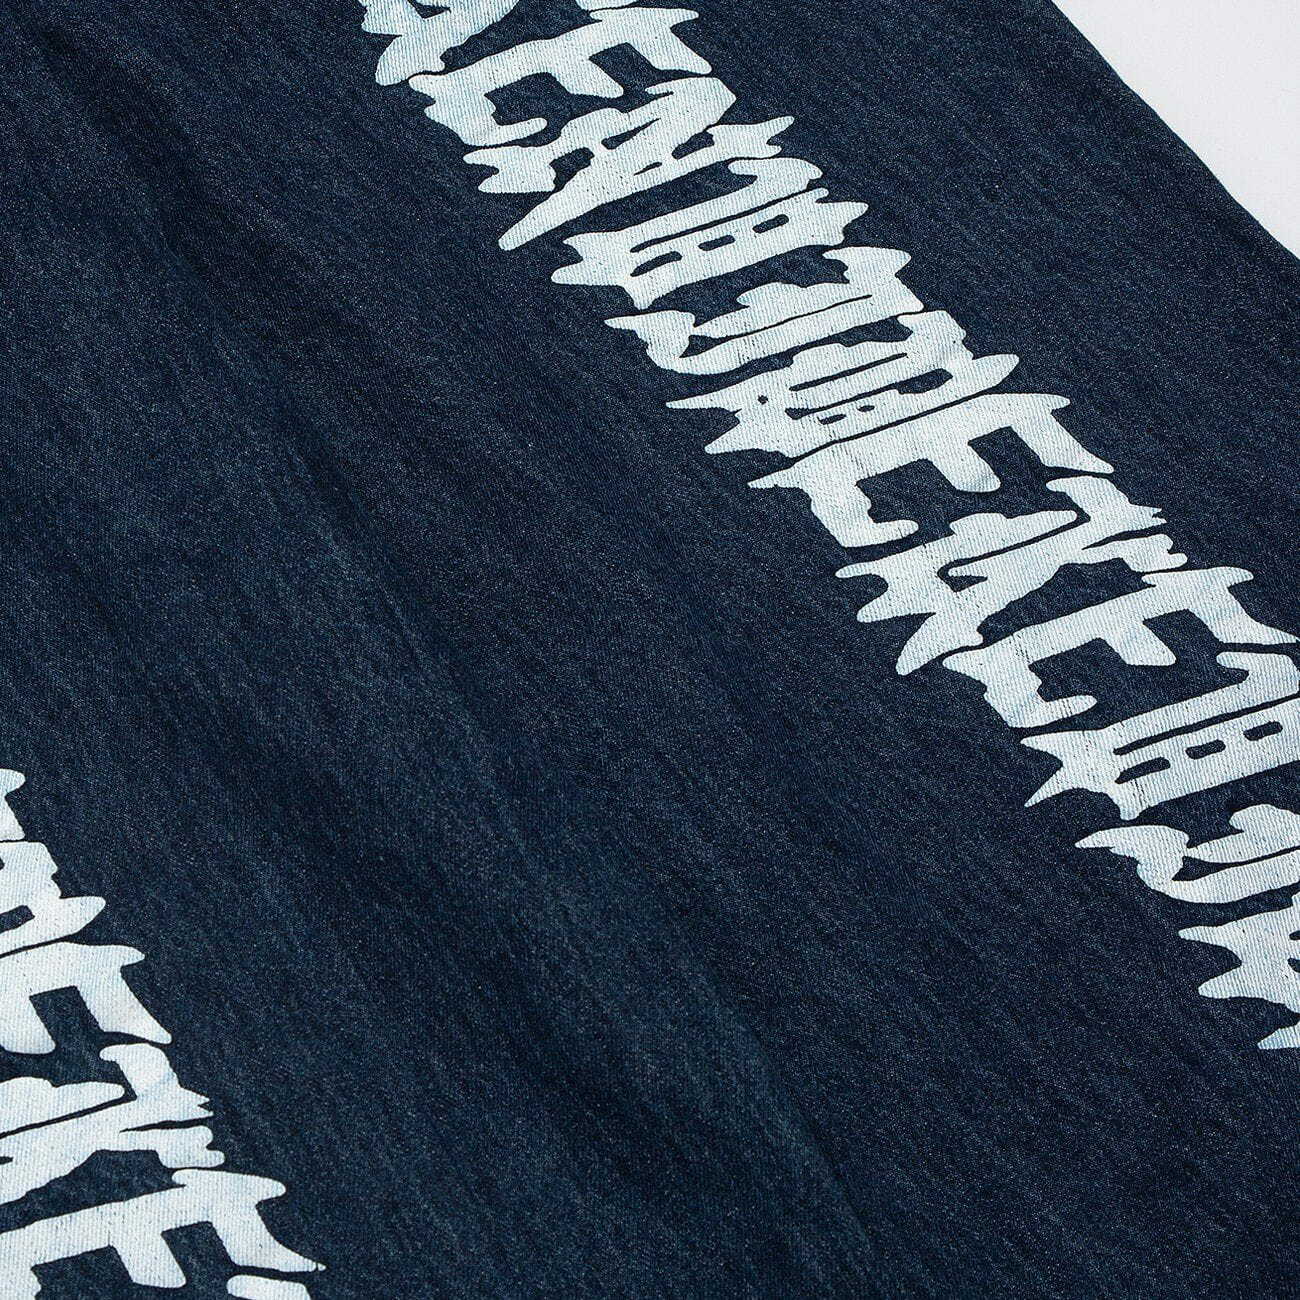 vintage denim patchwork jeans edgy streetwear essential 4043